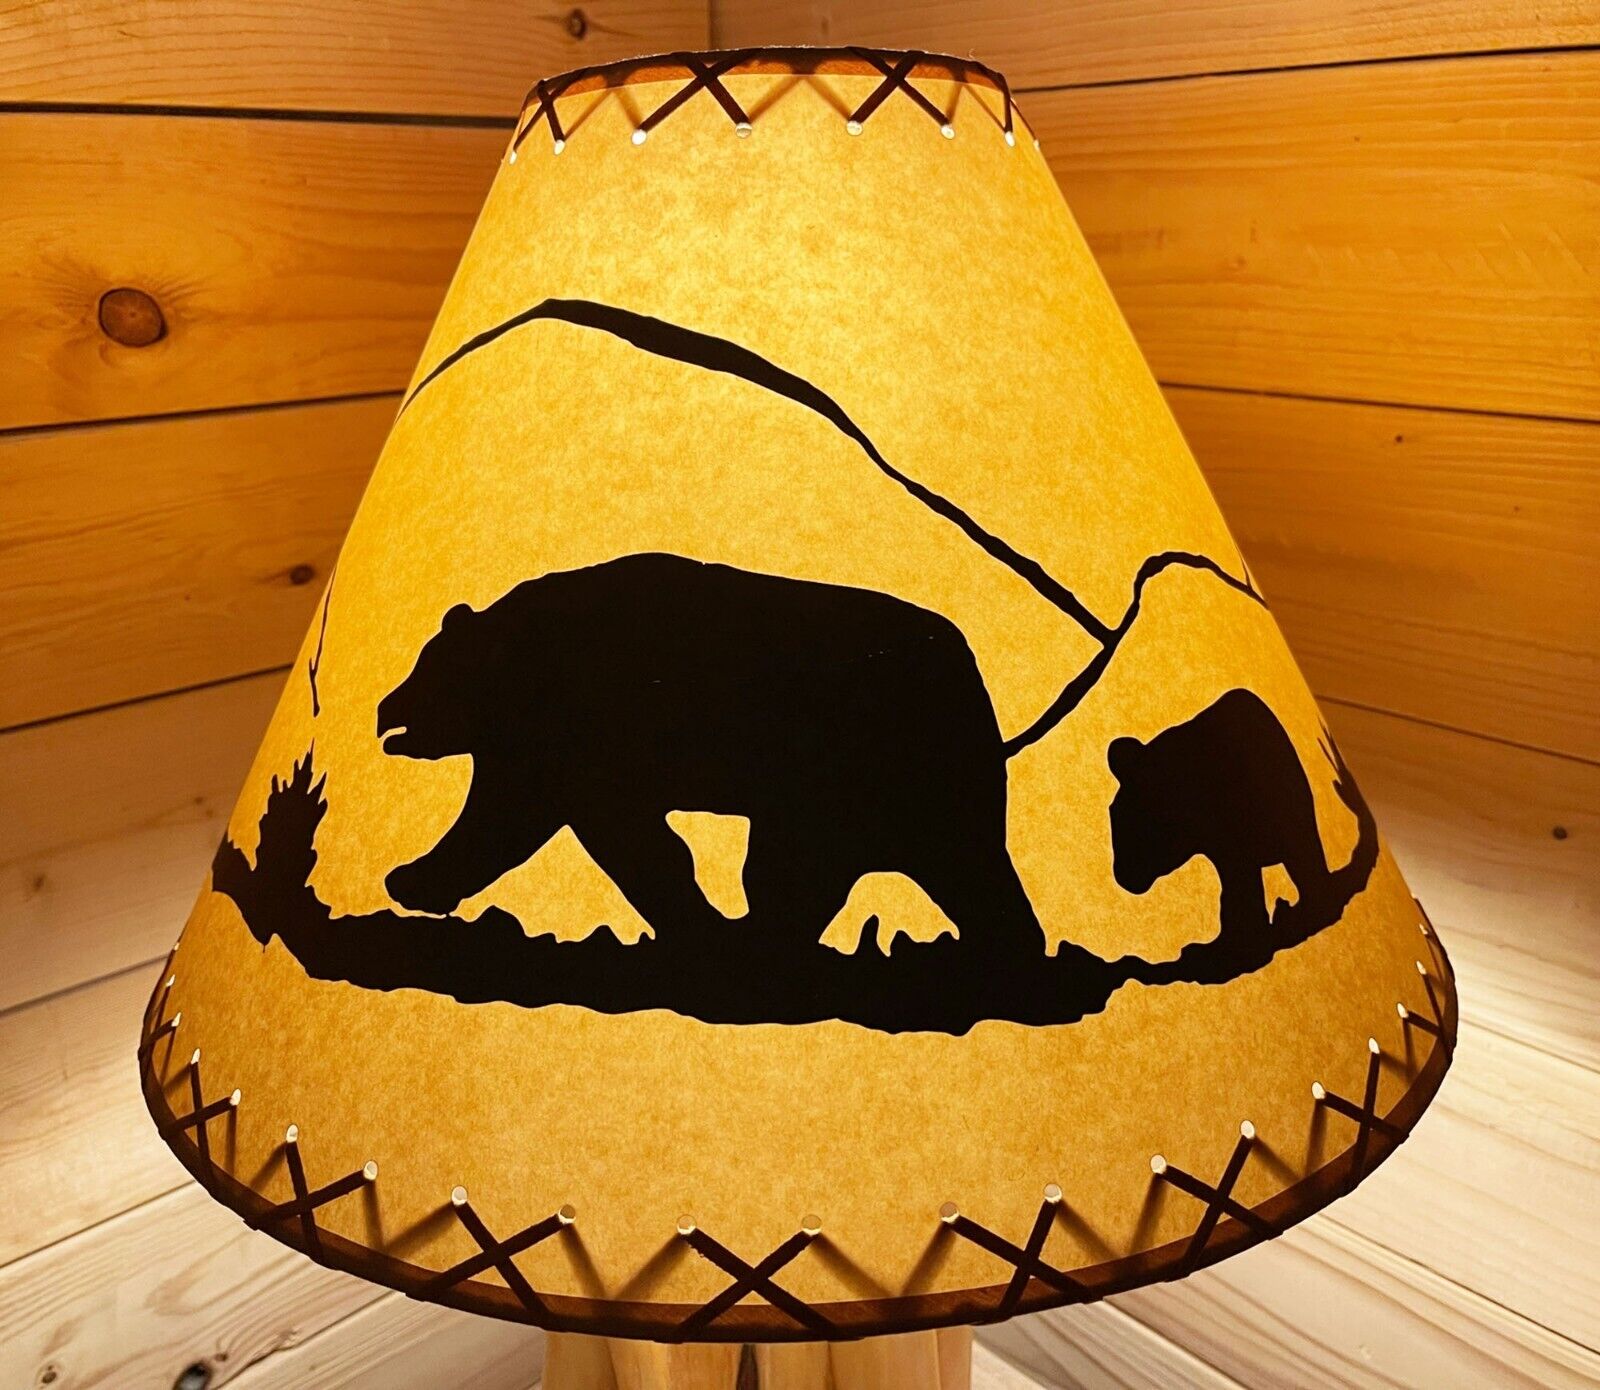 Rustic Oiled Kraft Lamp Shade with Bear Design - 18